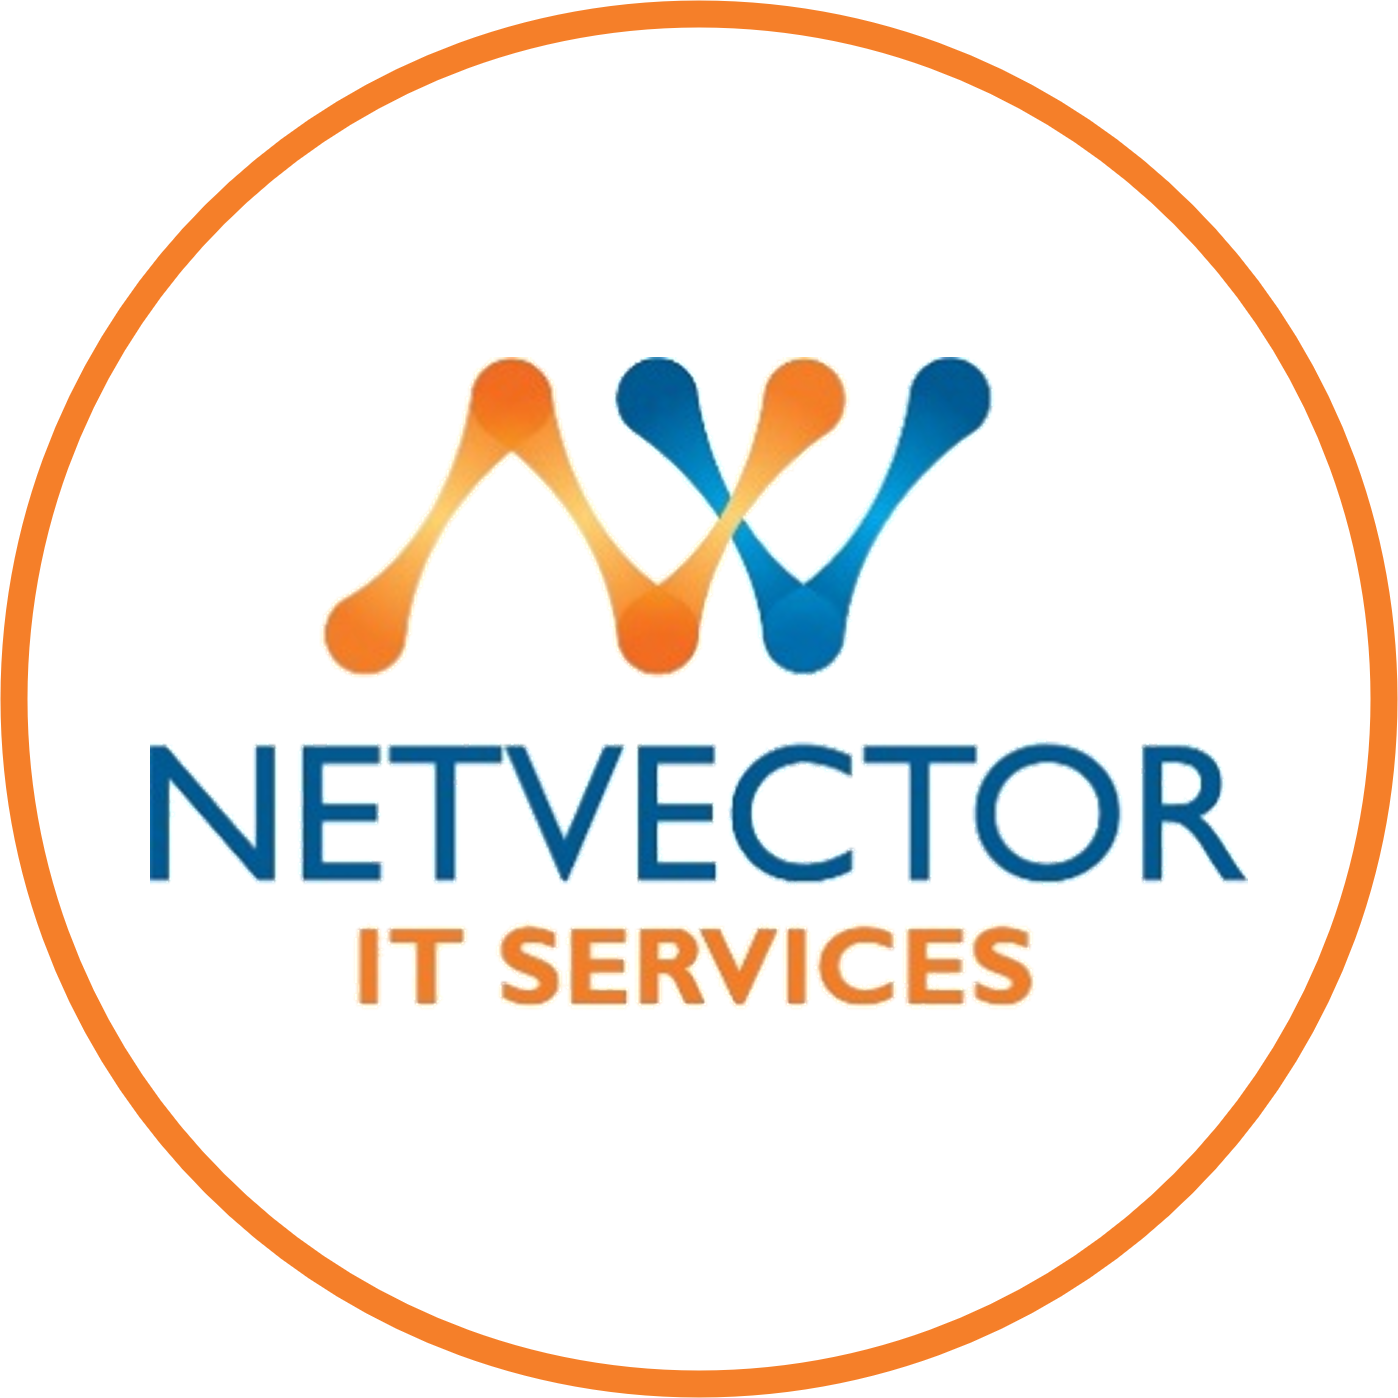 NETVECTOR IT SERVICES logo